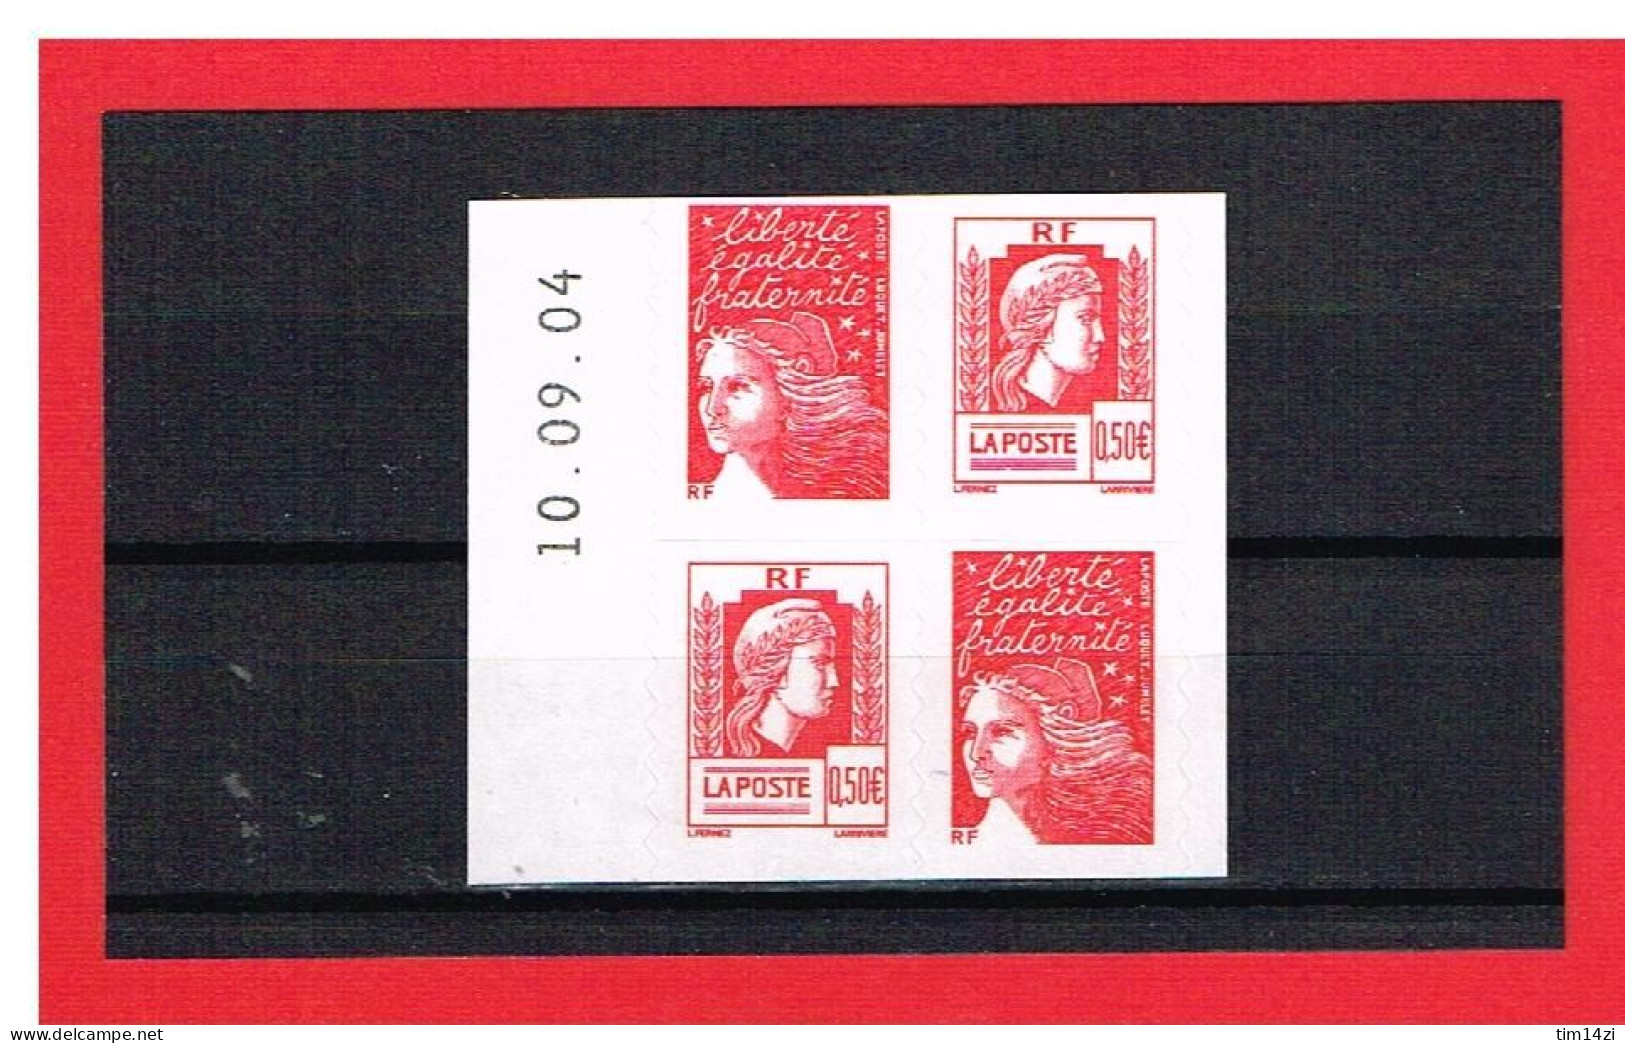 FRANCE -2004-  ADHESIFS** - 2 Paires - Date 10.09.04  - P N°43 Ou P N°3716 - Anniv Marianne D'ALGER - Y&T - COTE 12.00 € - Unused Stamps